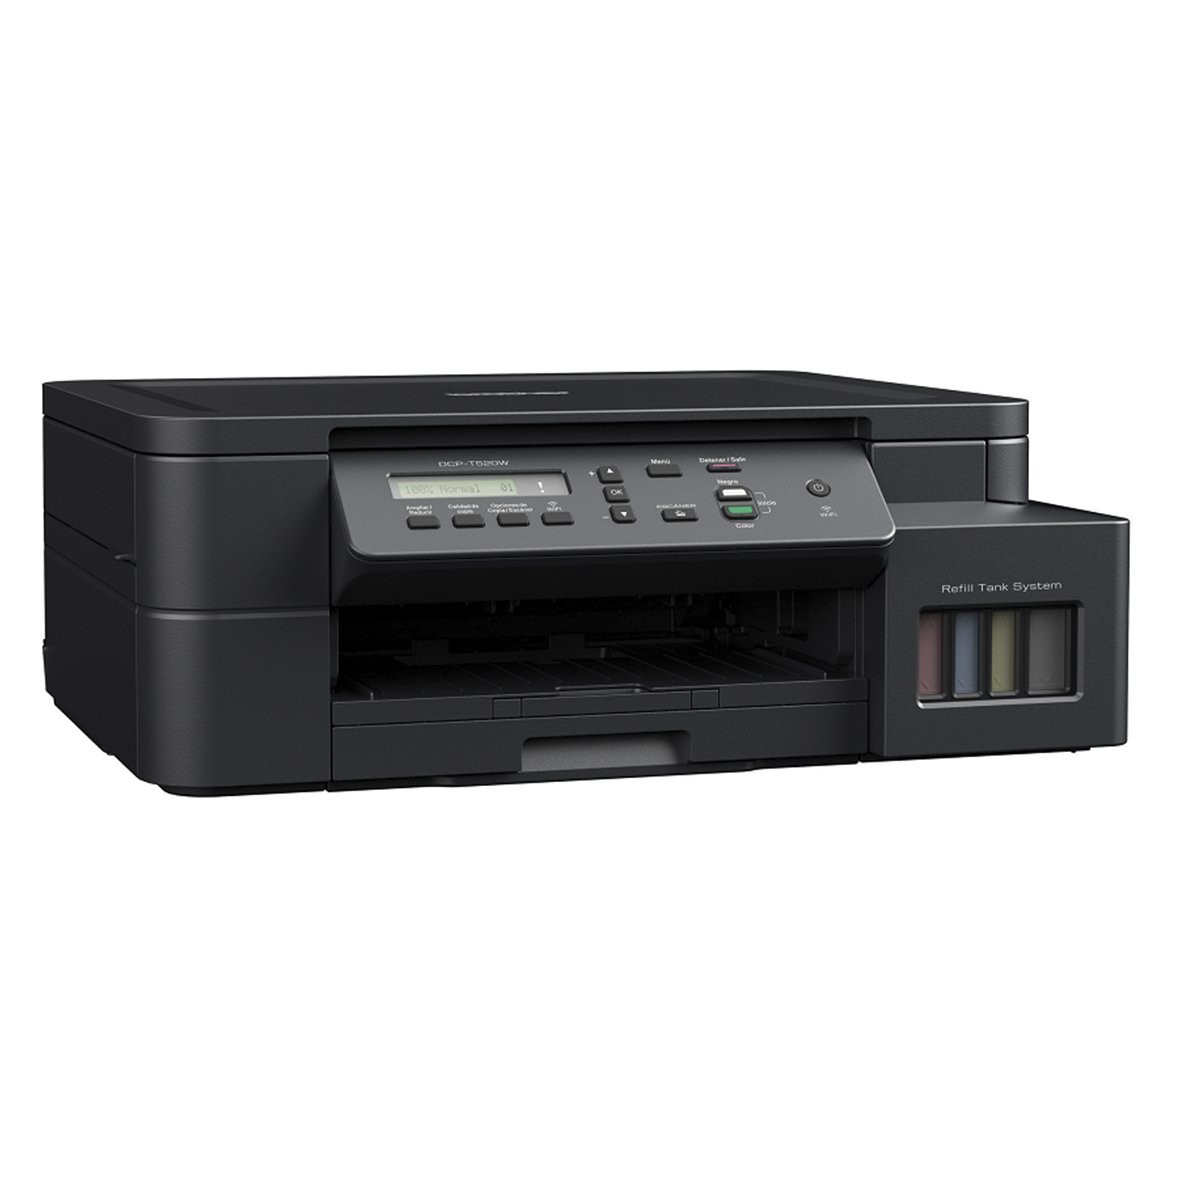 Impressora Brother DCP-T520W T520W Multifuncional Jato de Tinta Colorida com Wireless